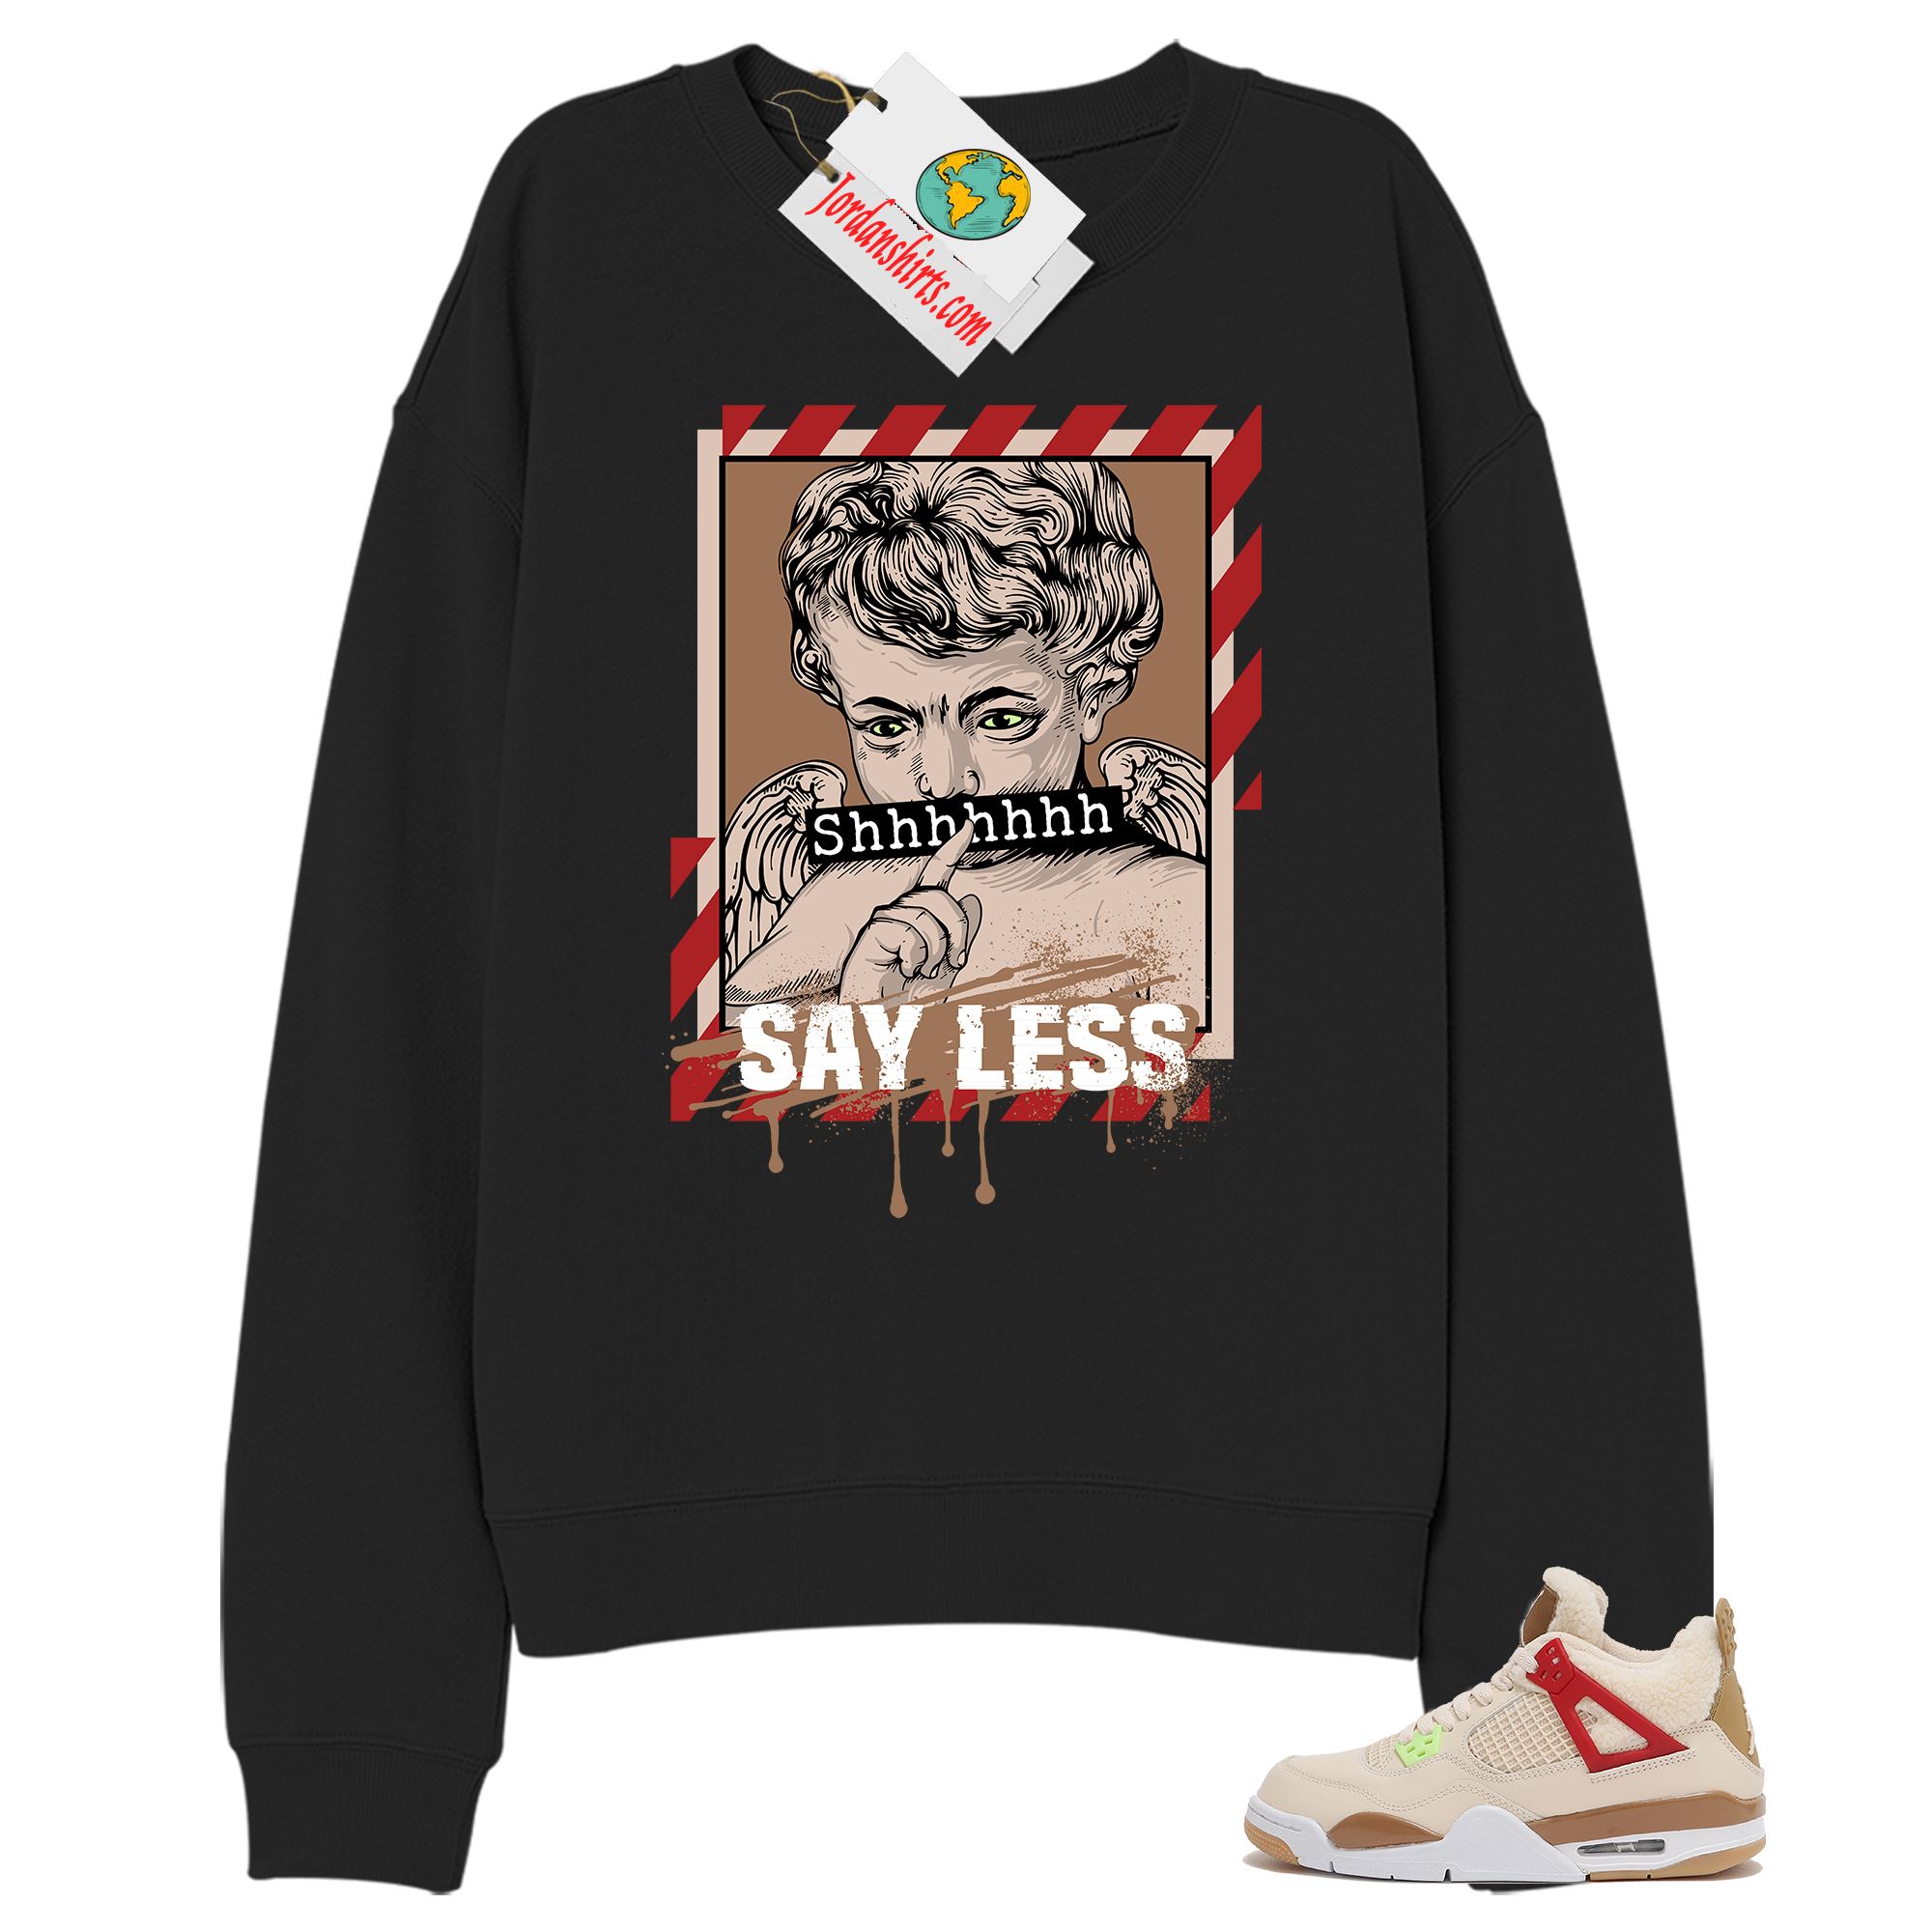 Jordan 4 Sweatshirt, Say Less Angel Black Sweatshirt Air Jordan 4 Wild Things 4s Full Size Up To 5xl